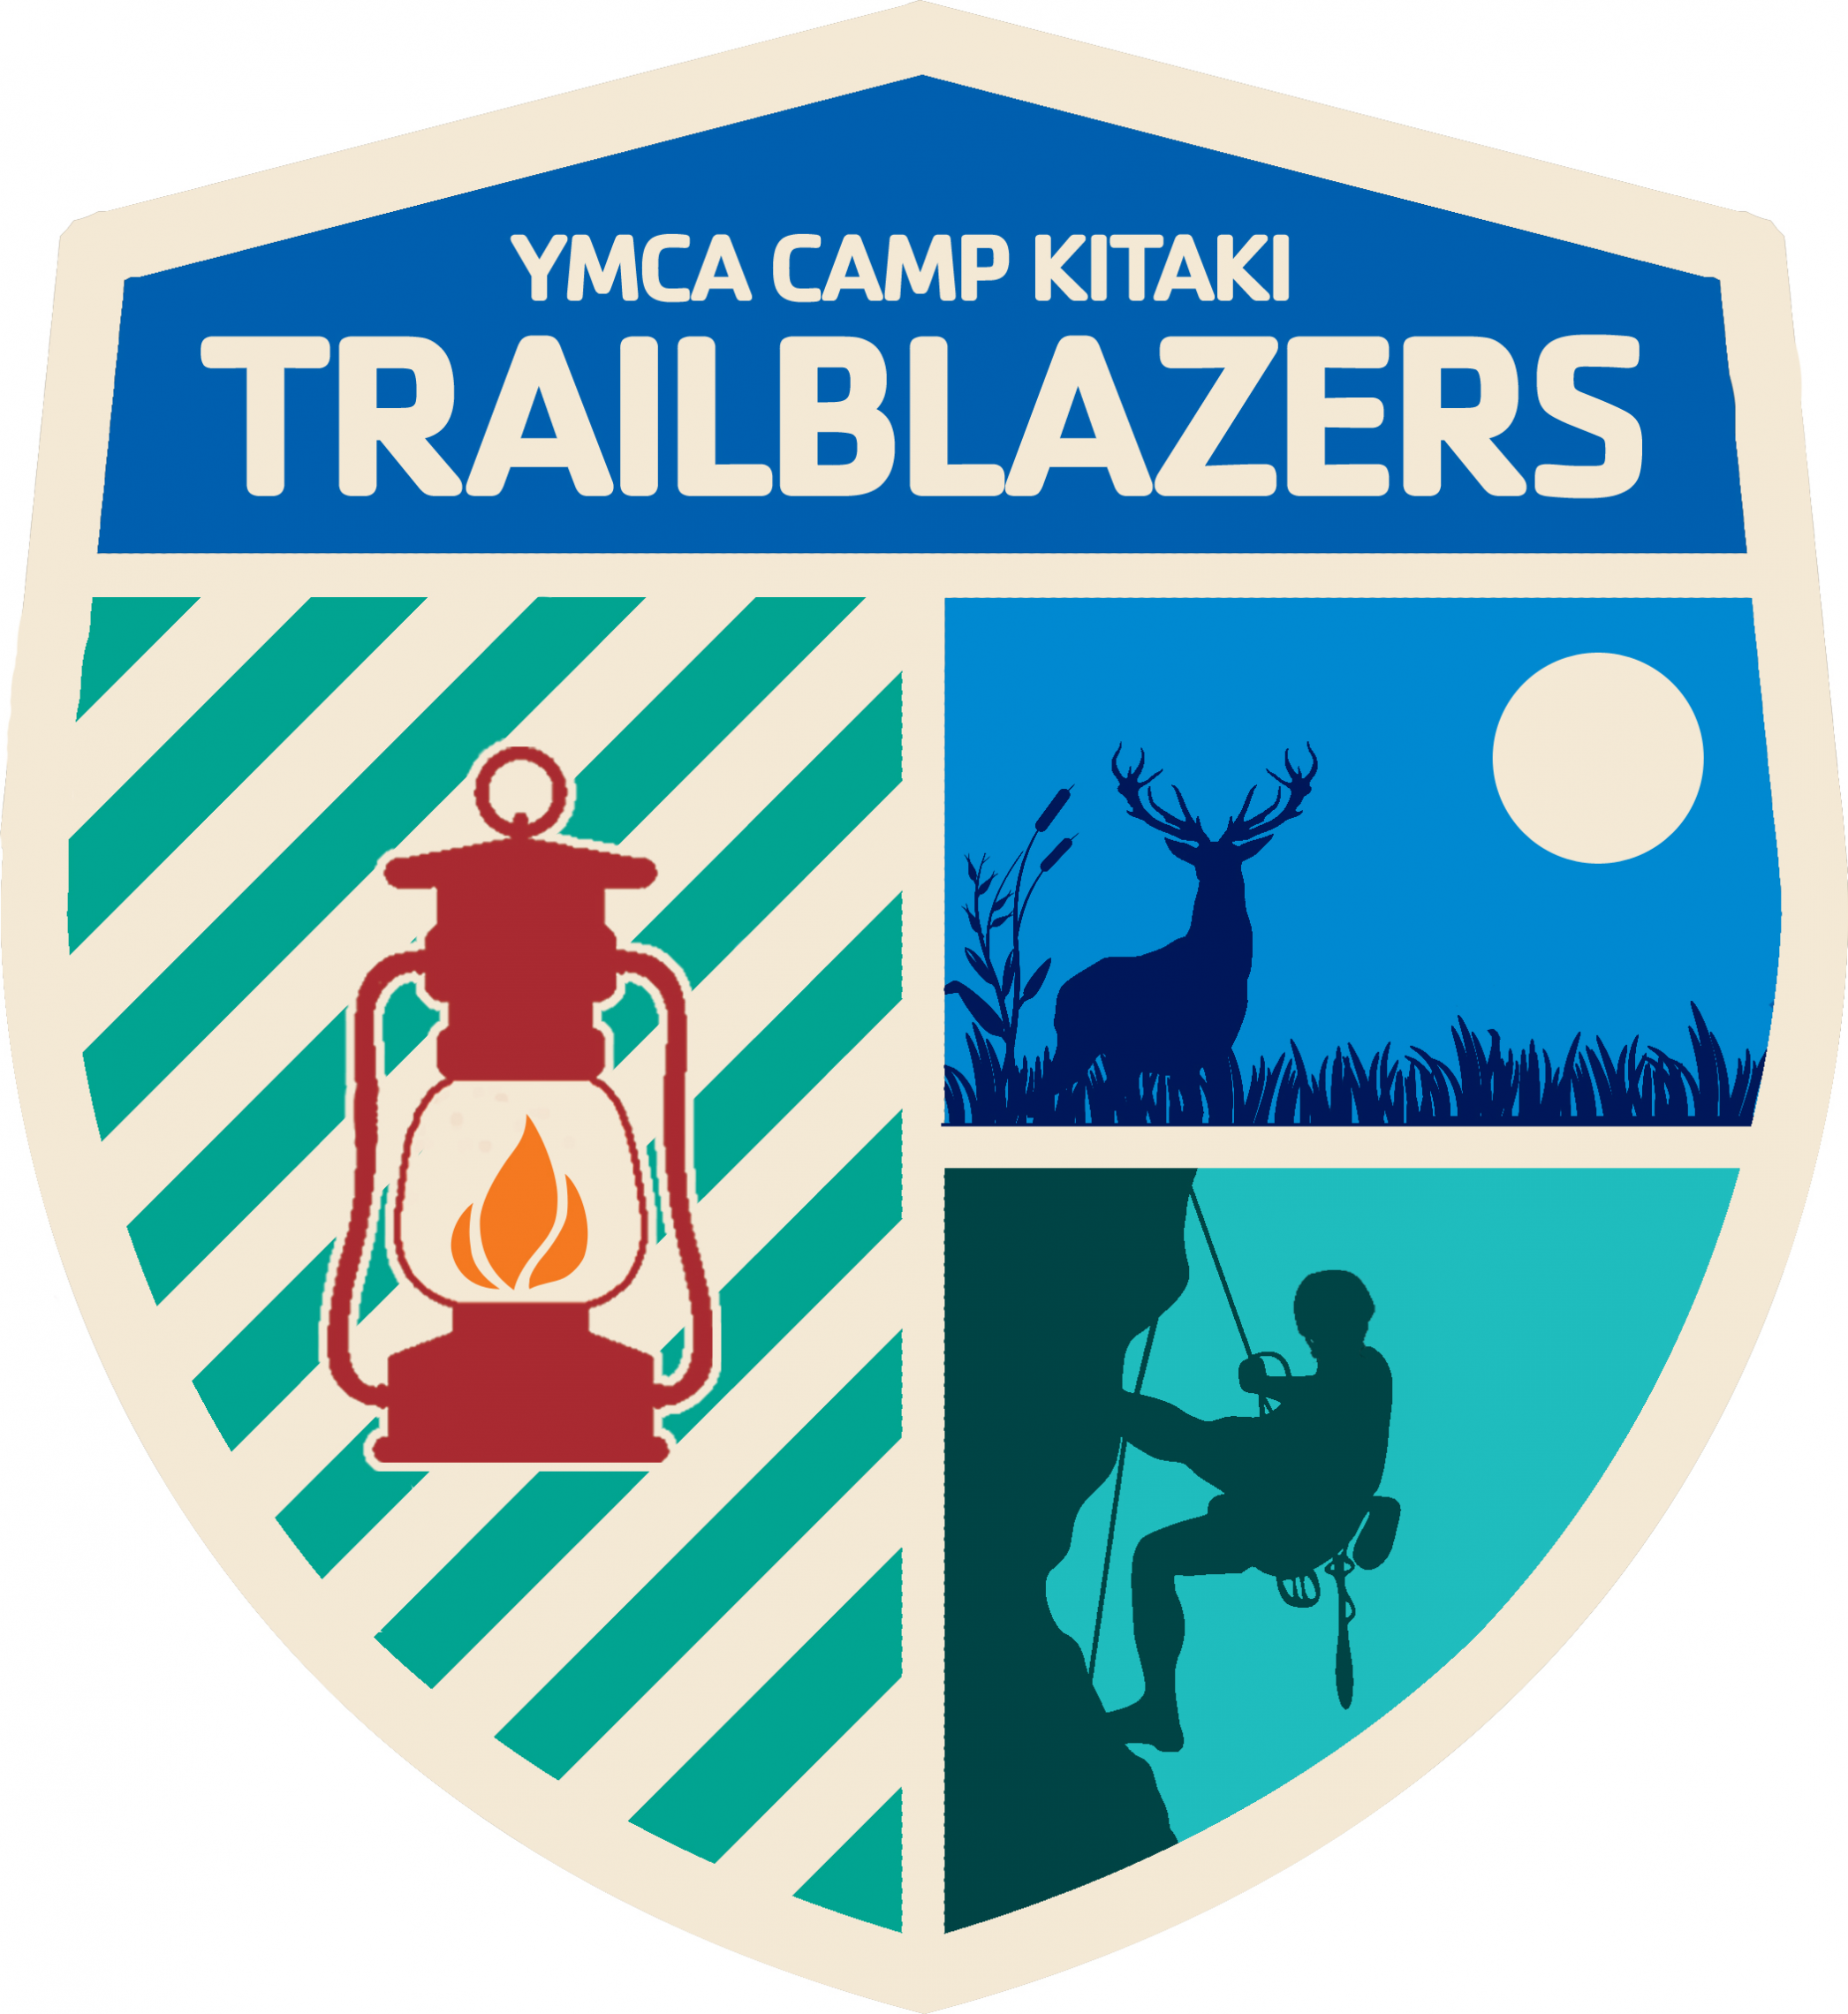 A program badge for the Trailblazers program